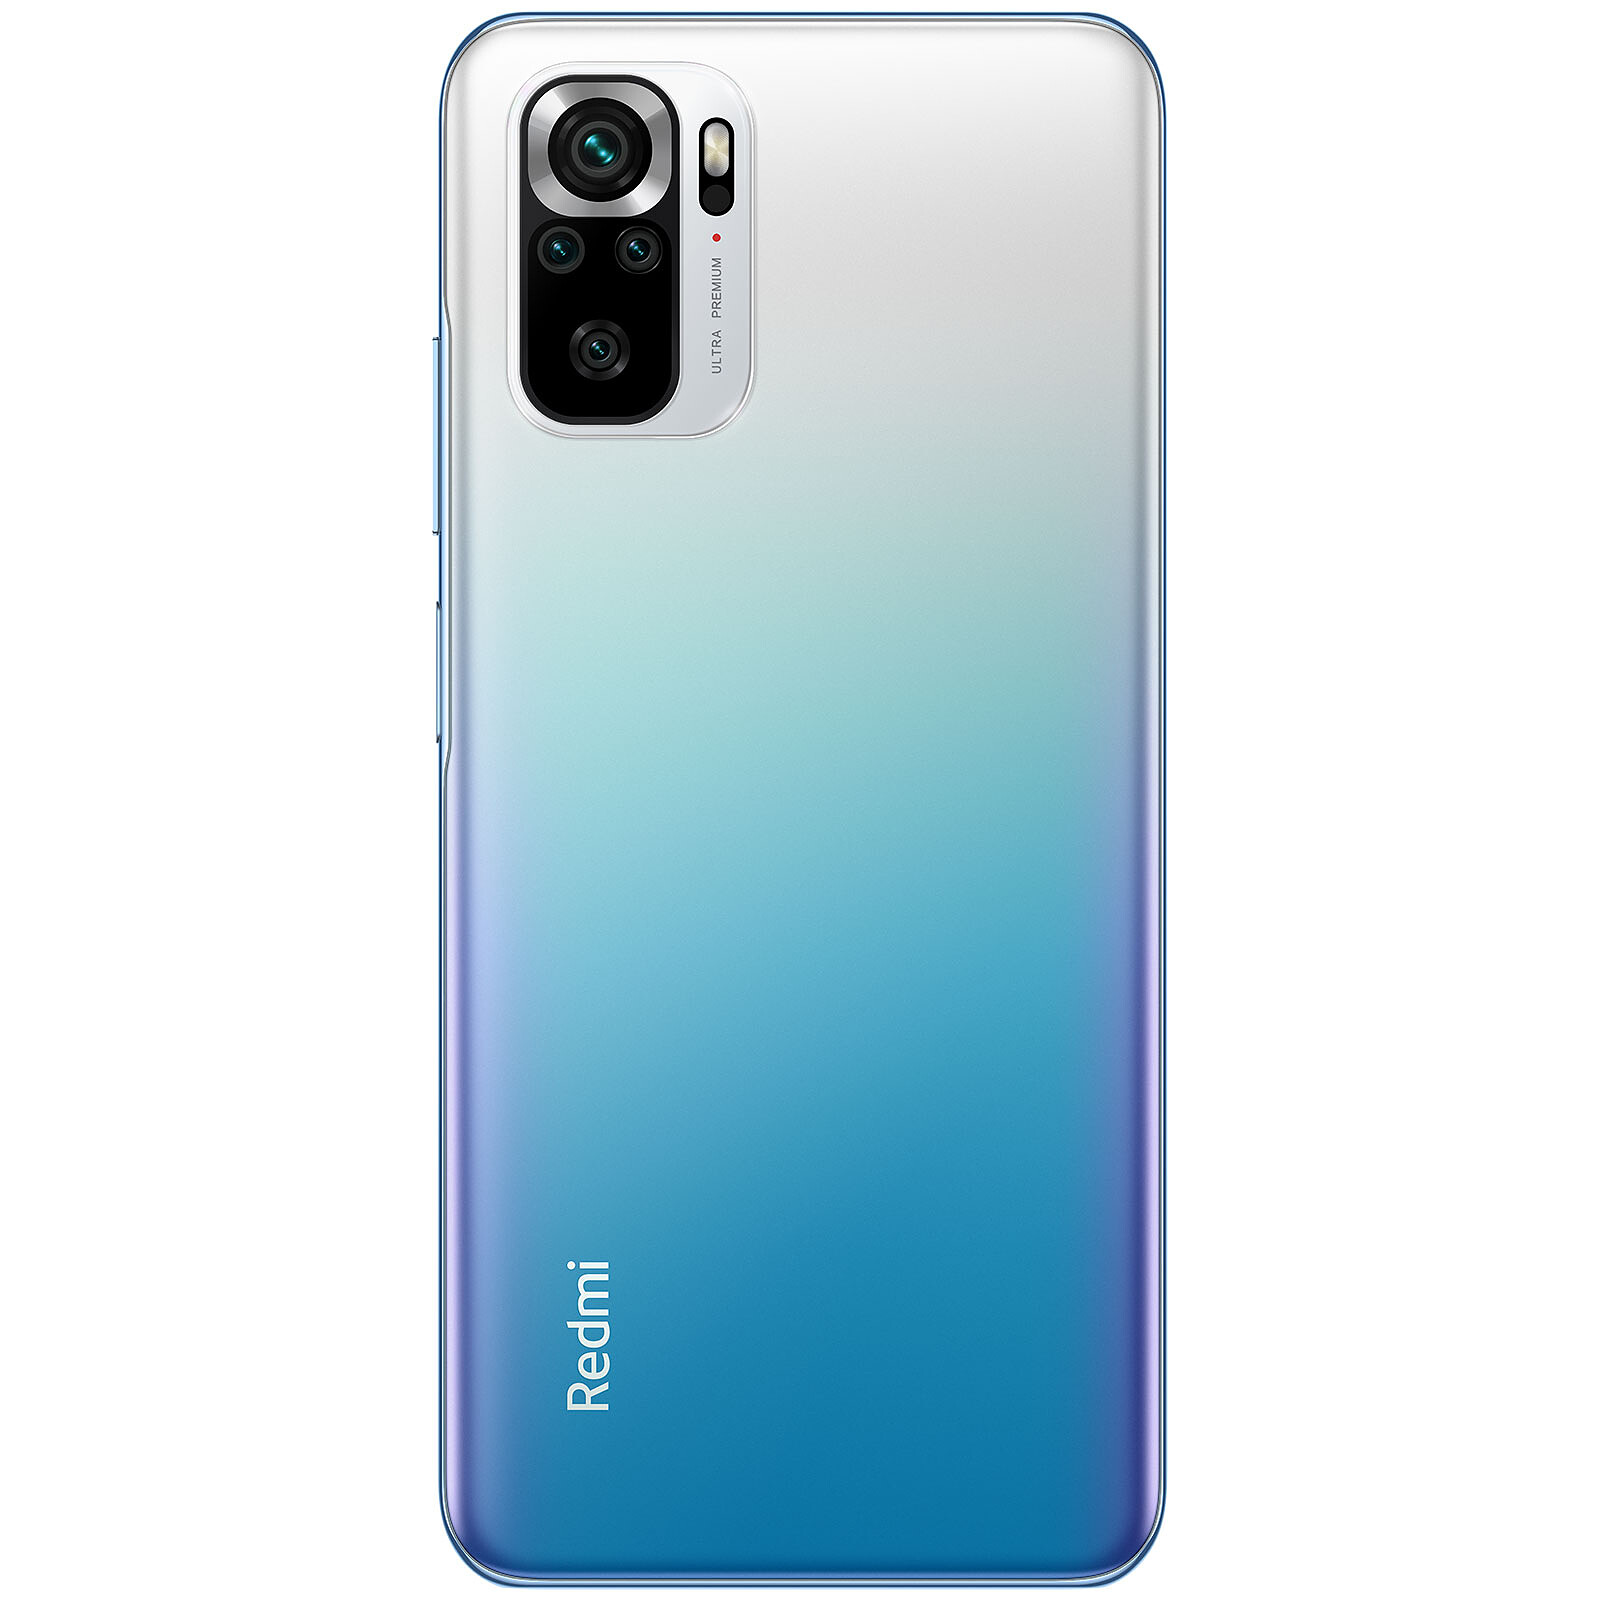 XIAOMI Smartphone Redmi Note 8 Pro EU 6+64 Blue Pas Cher 